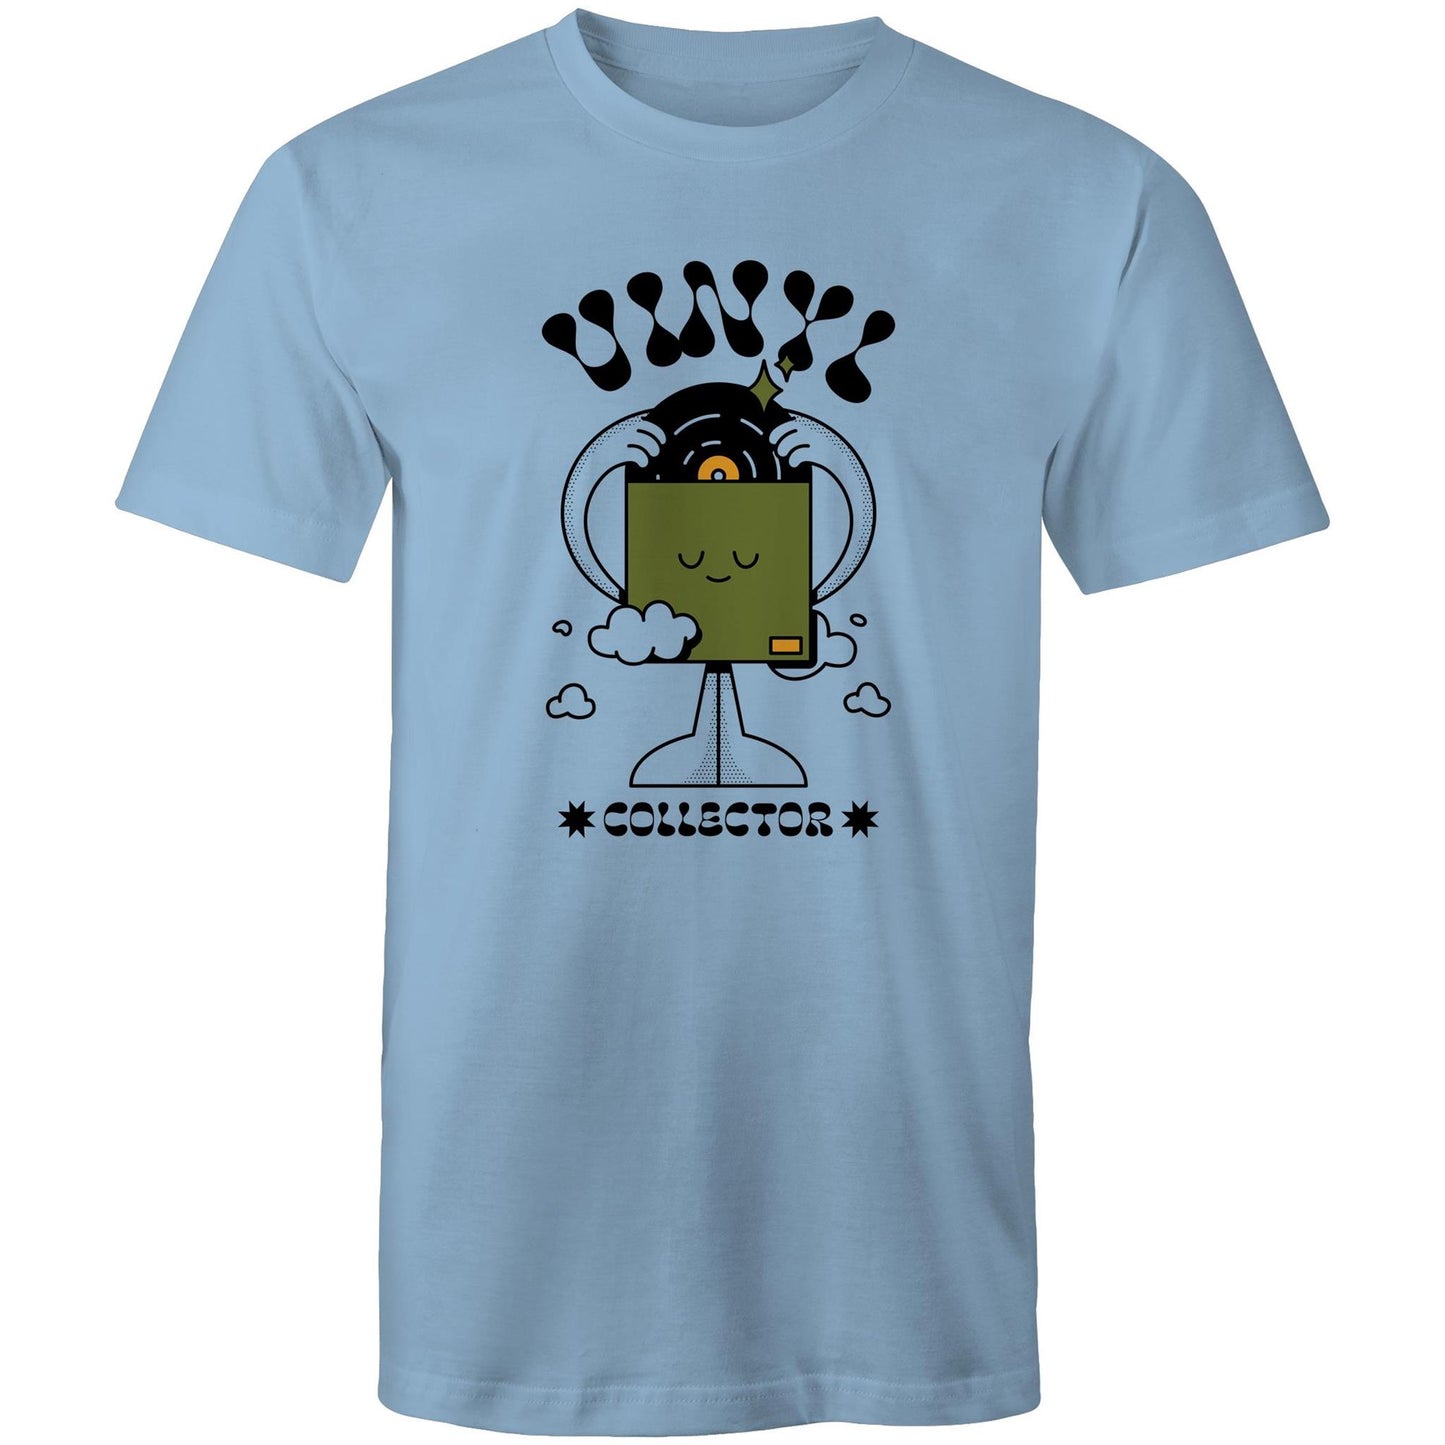 Vinyl Collector - Mens T-Shirt Carolina Blue Mens T-shirt Music Retro